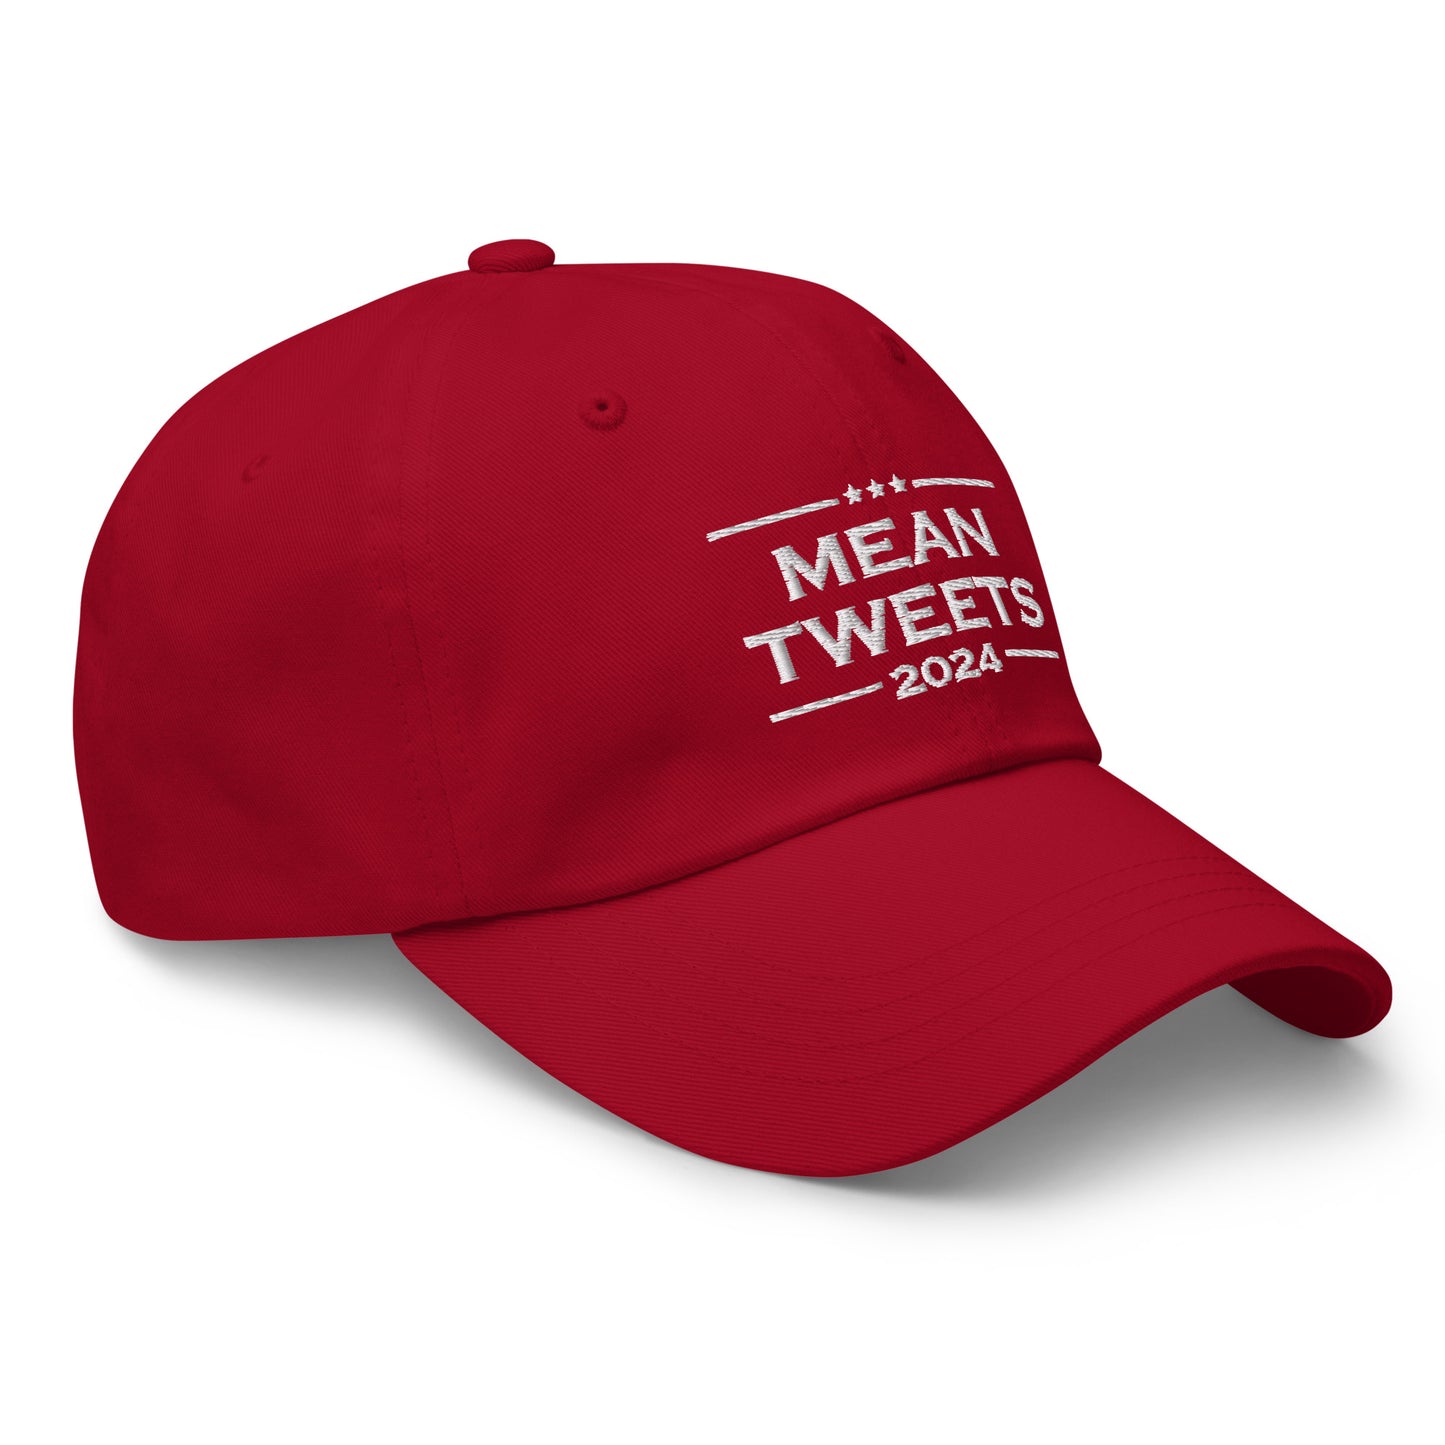 Mean Tweets 2024 hat